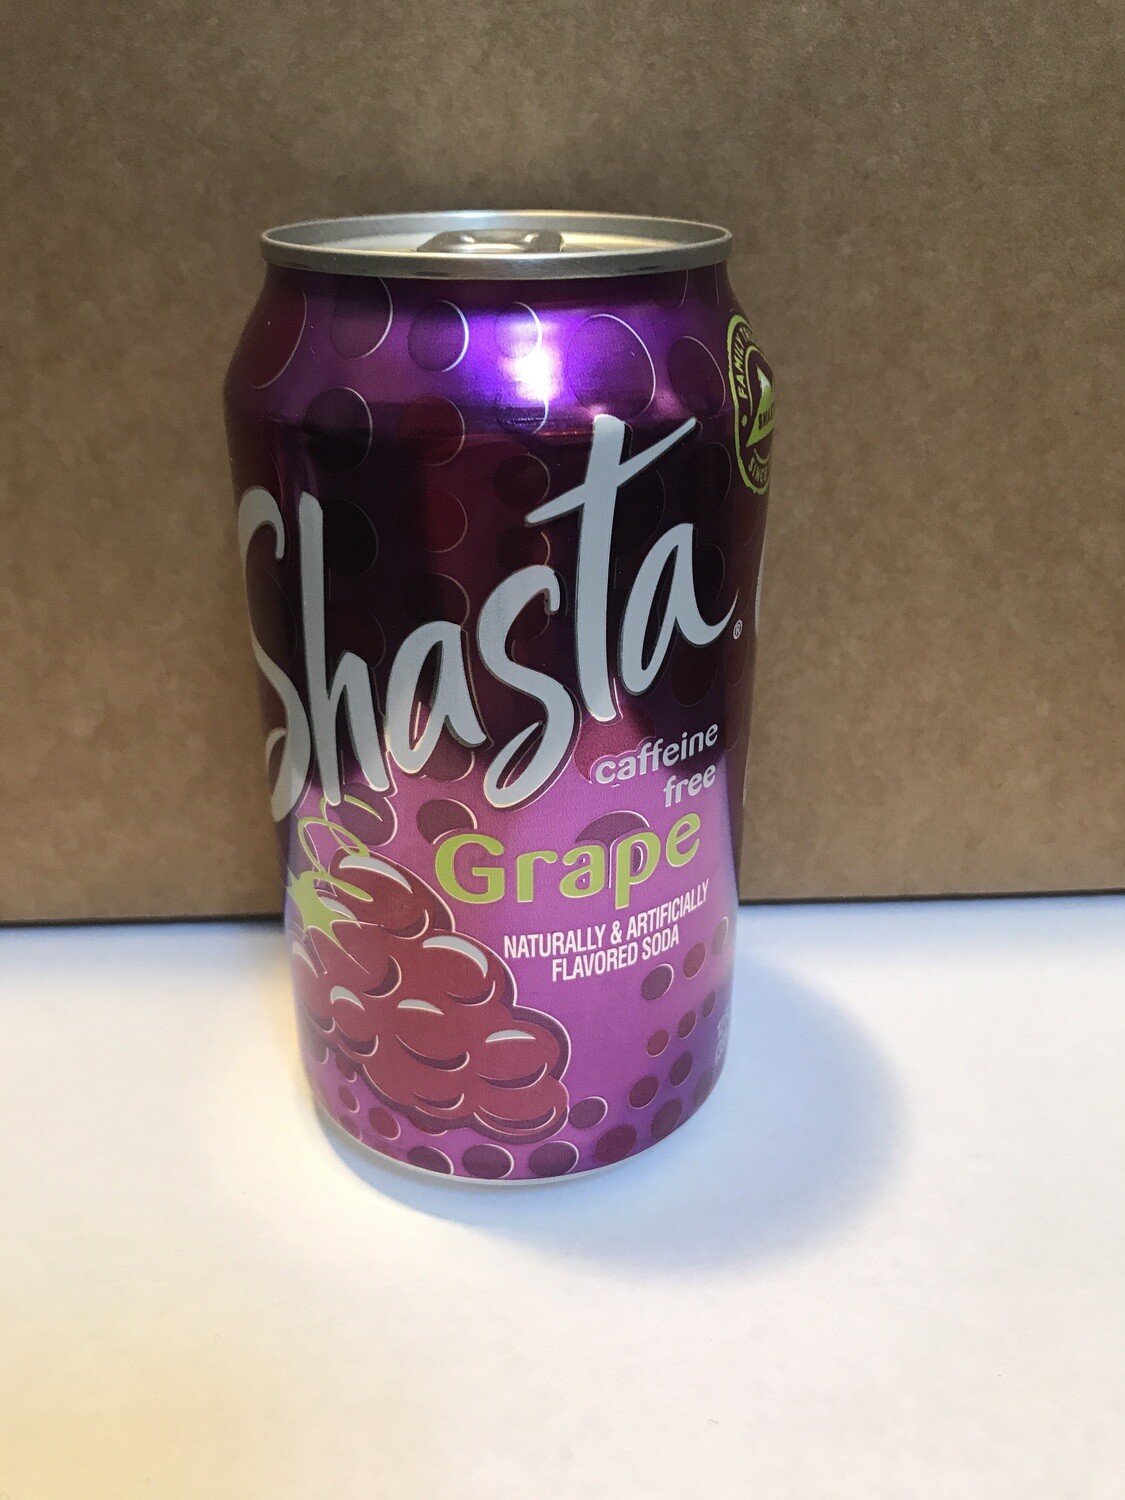 Beverage / Soda / Shasta Grape, 12 oz